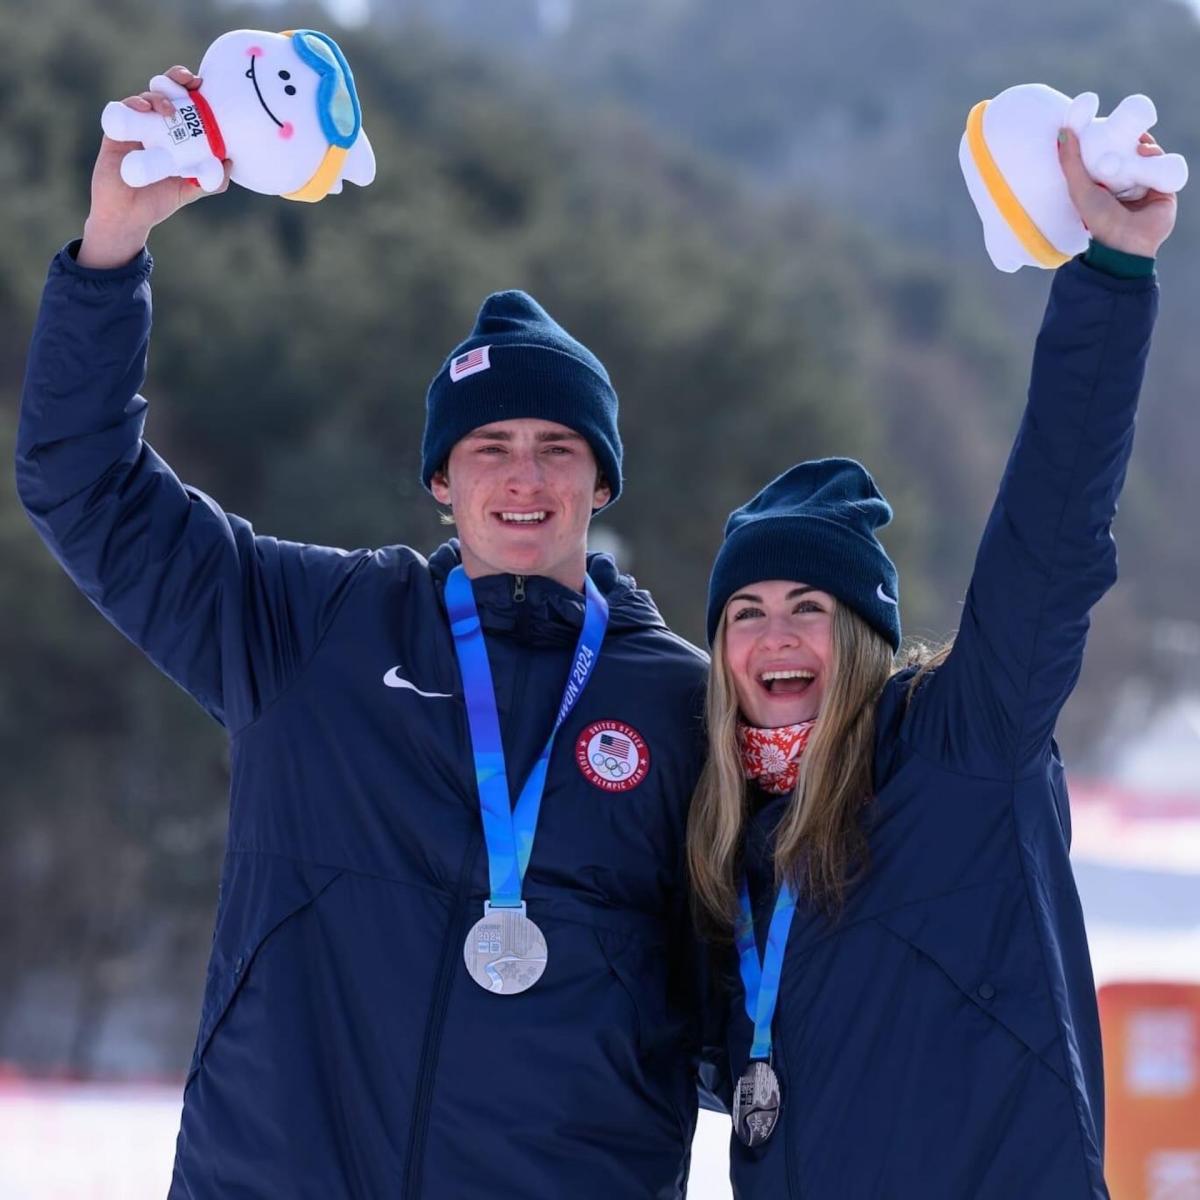 Robinson and Shute Claim Silver in Ski Cross Team Event